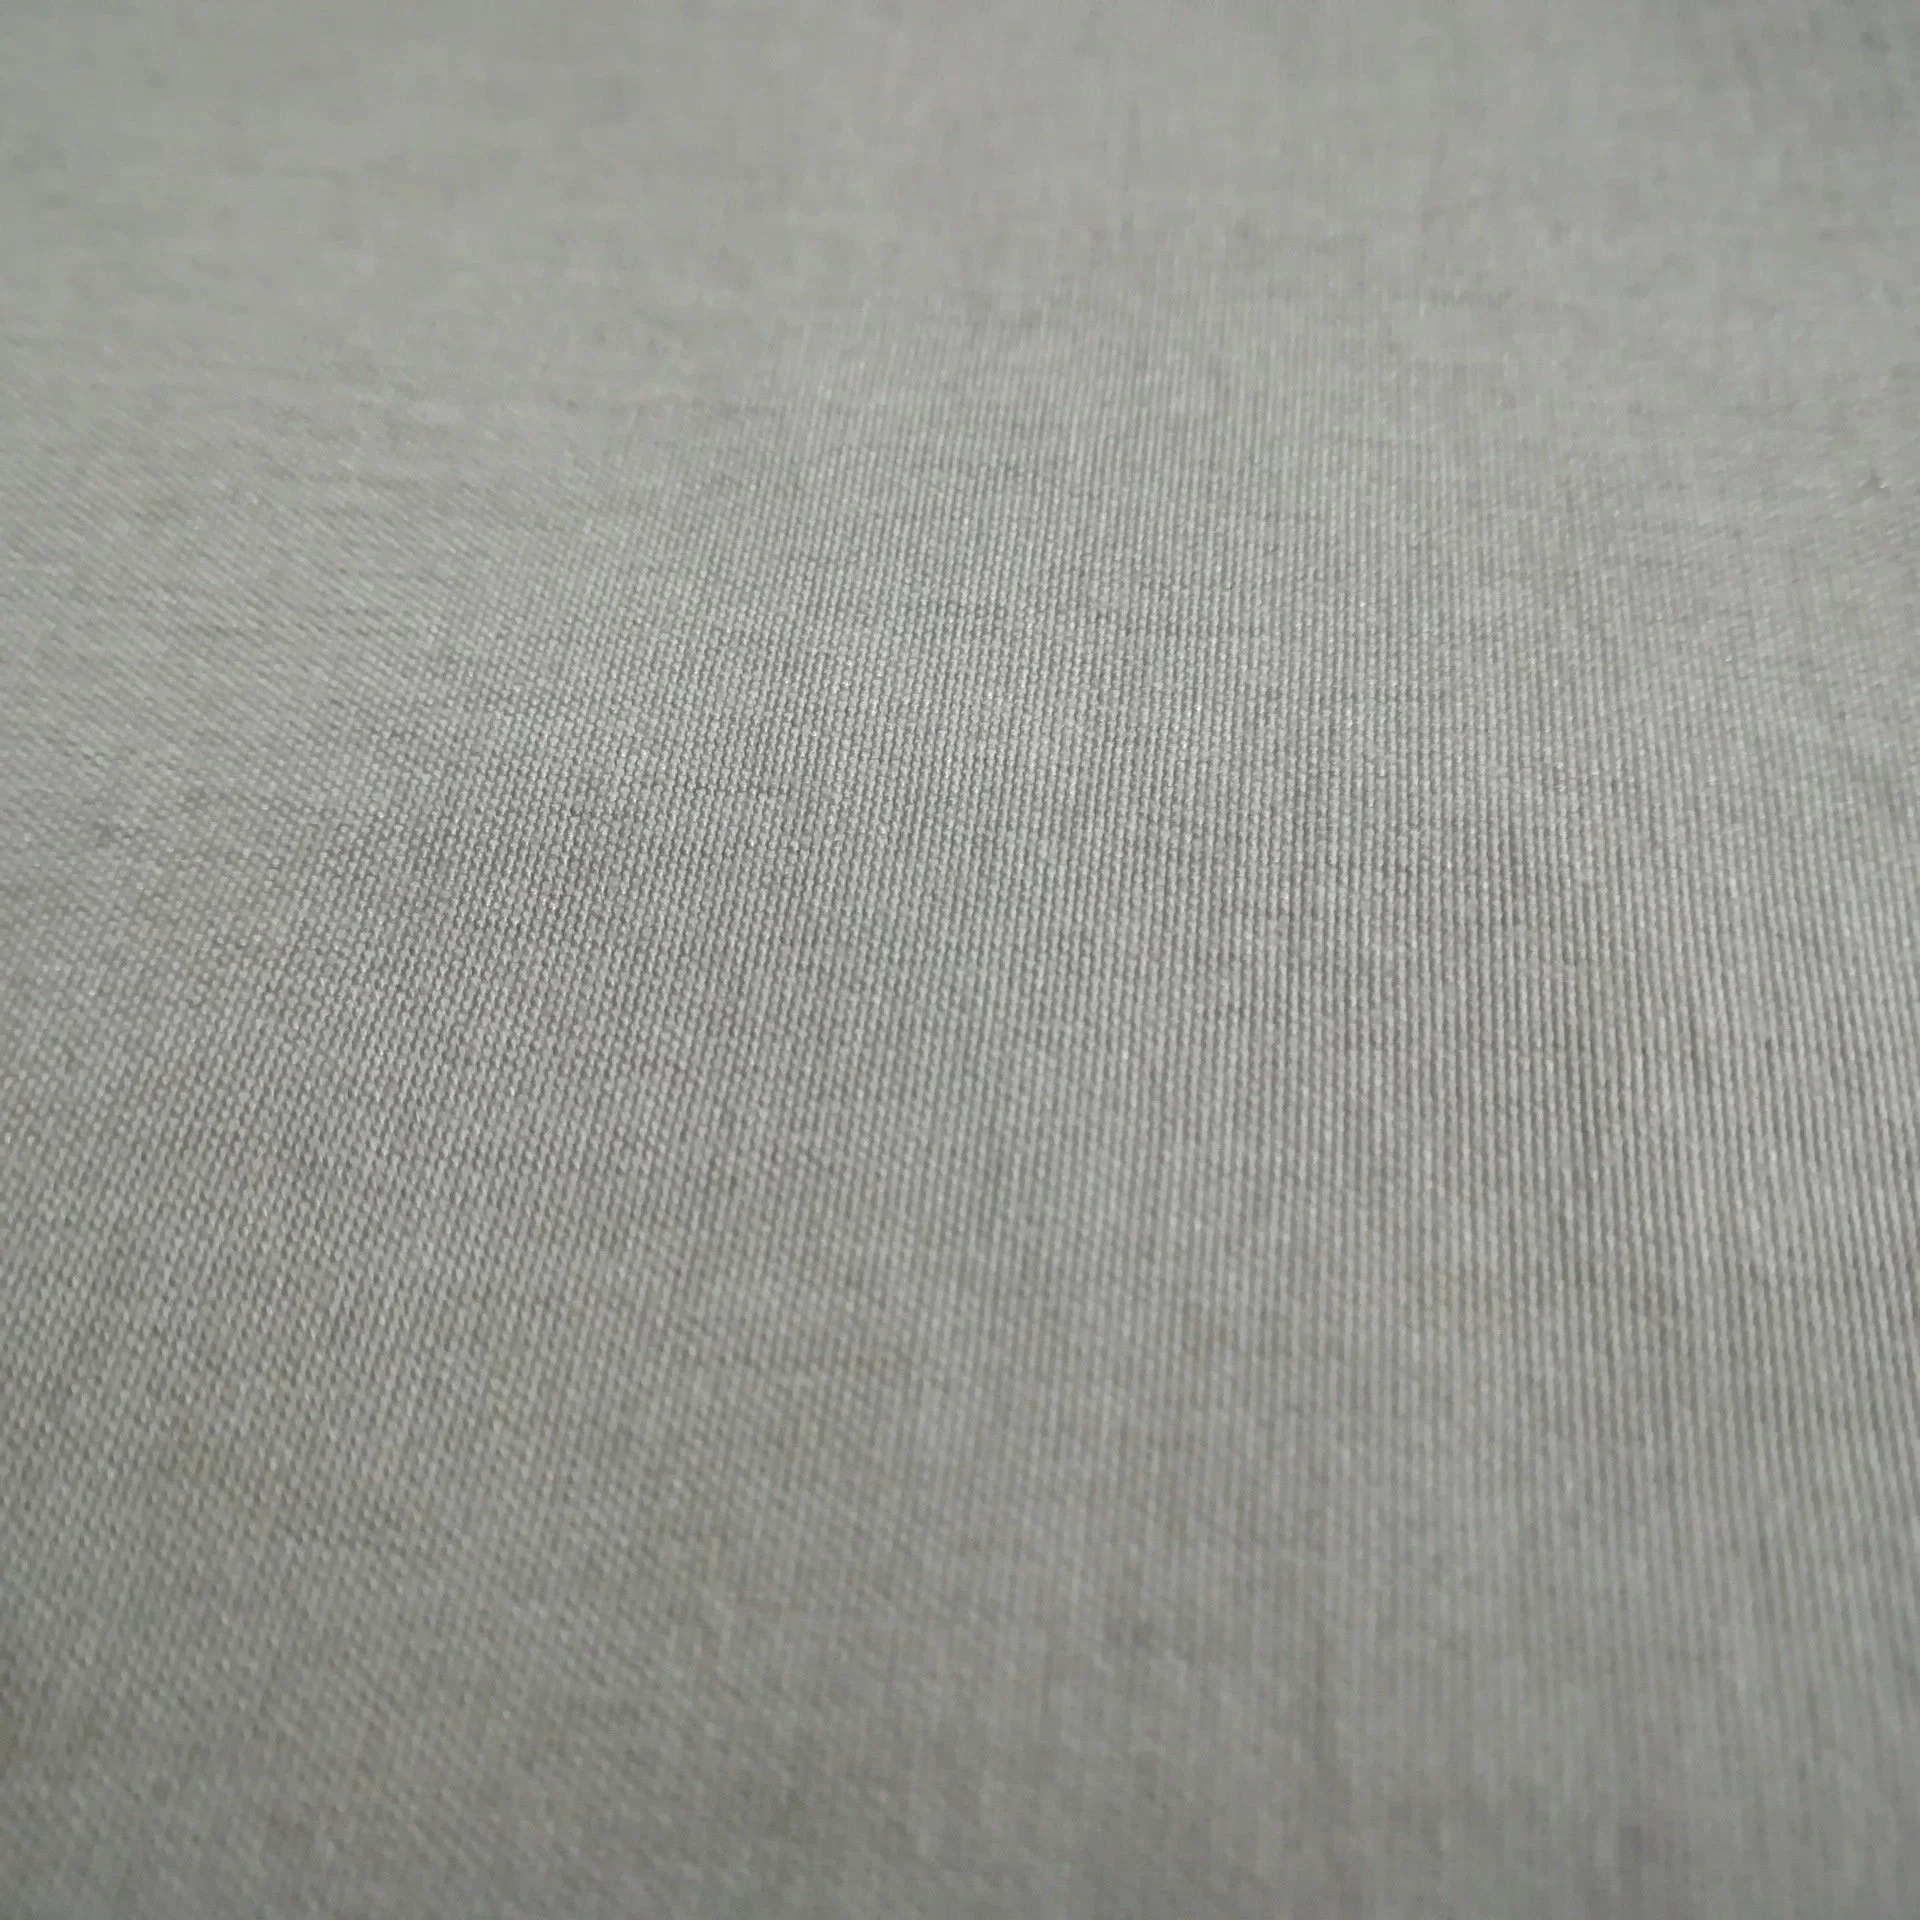 Nylon Quaste Fabric96%Nylon +4%Spandex Stoff 160d vierseitig elastisch